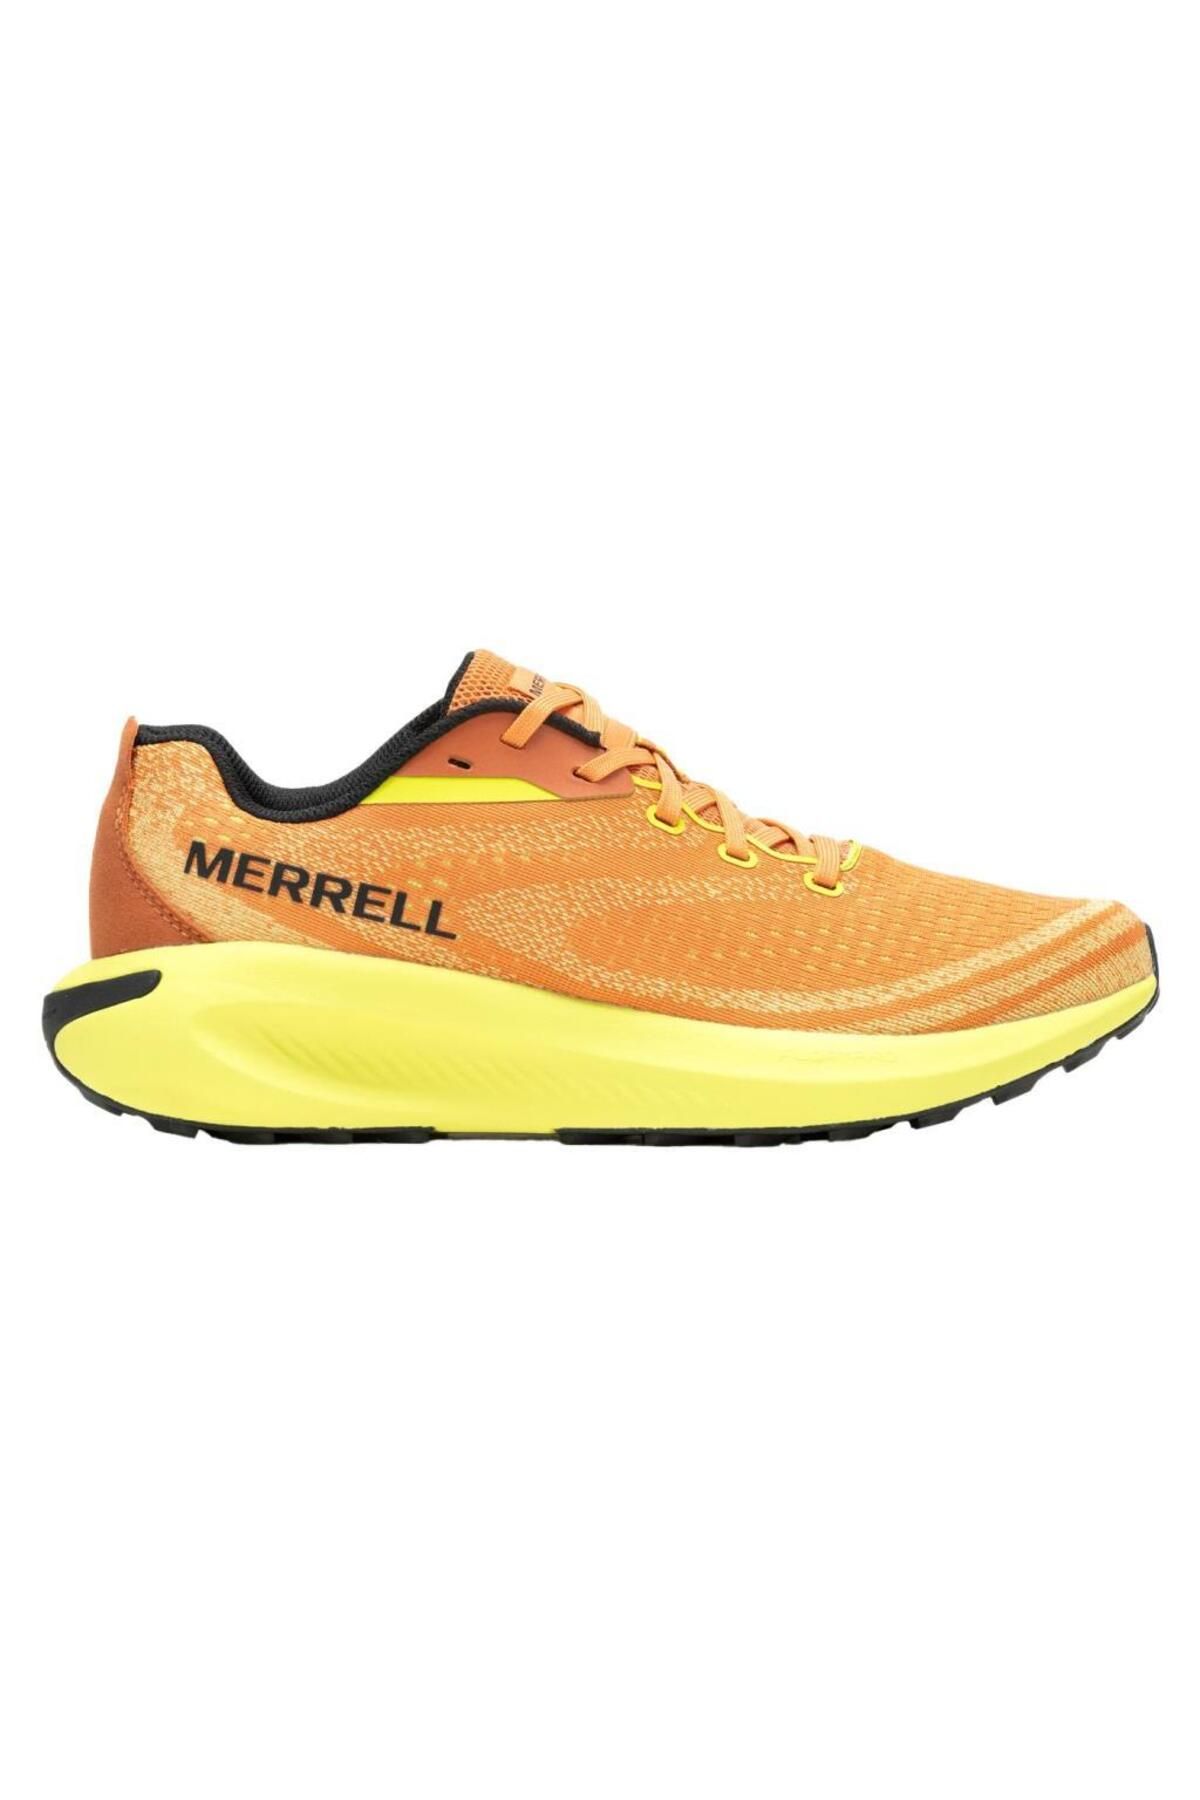 Merrell J068071 Morphlite Melon/Hiviz Erkek Outdoor Ayakkabı